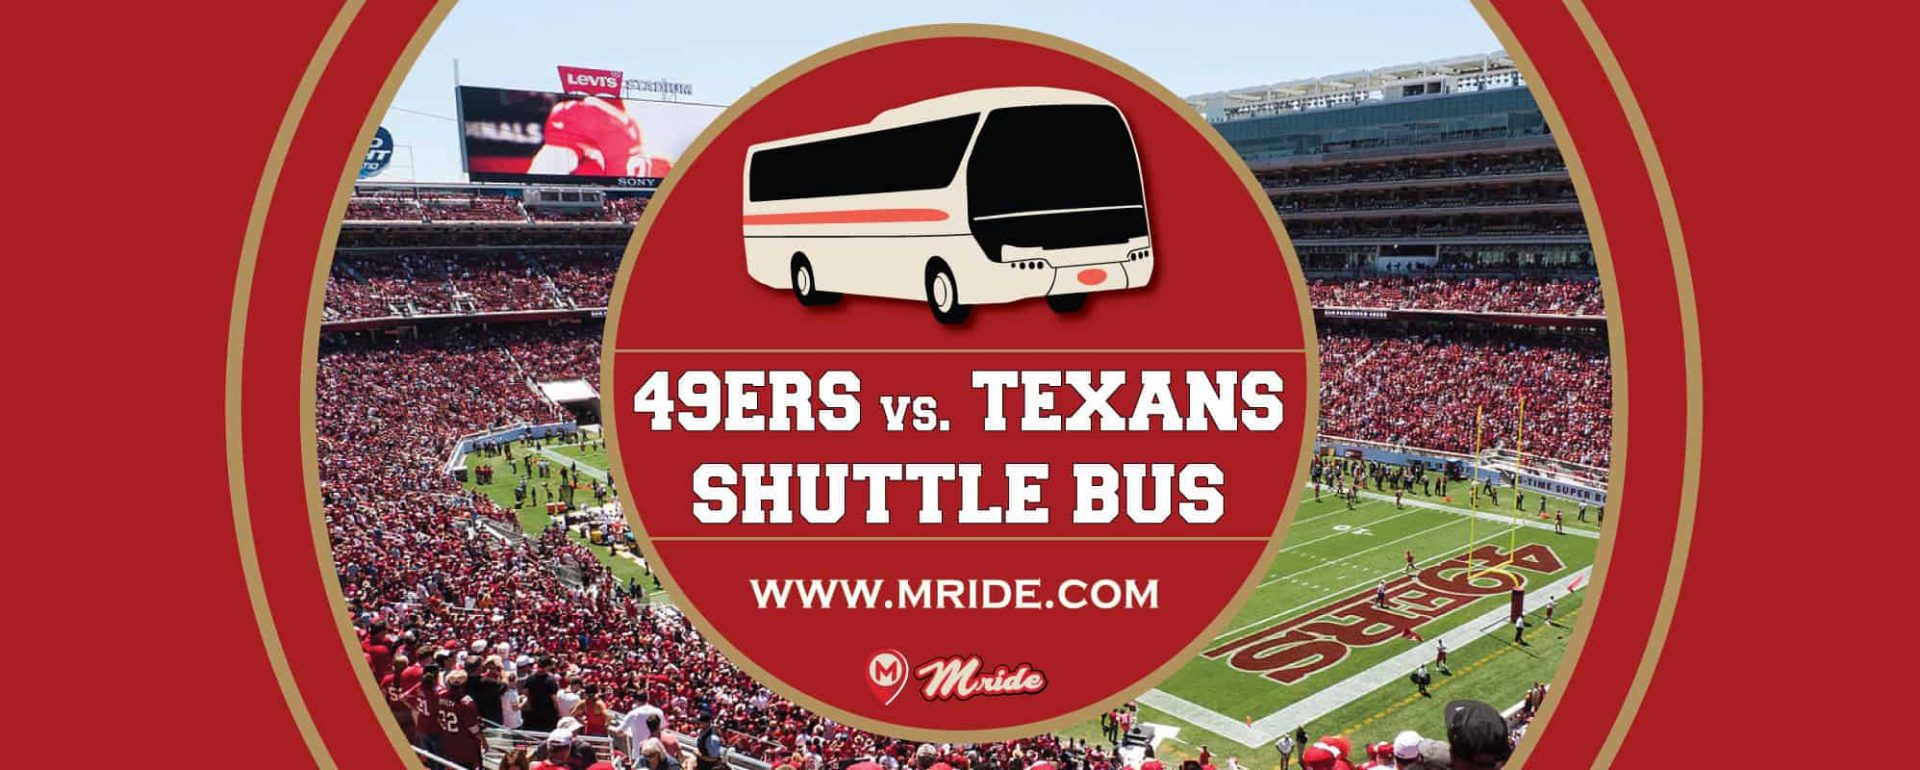 49ers vs. Texans Shuttle Bus